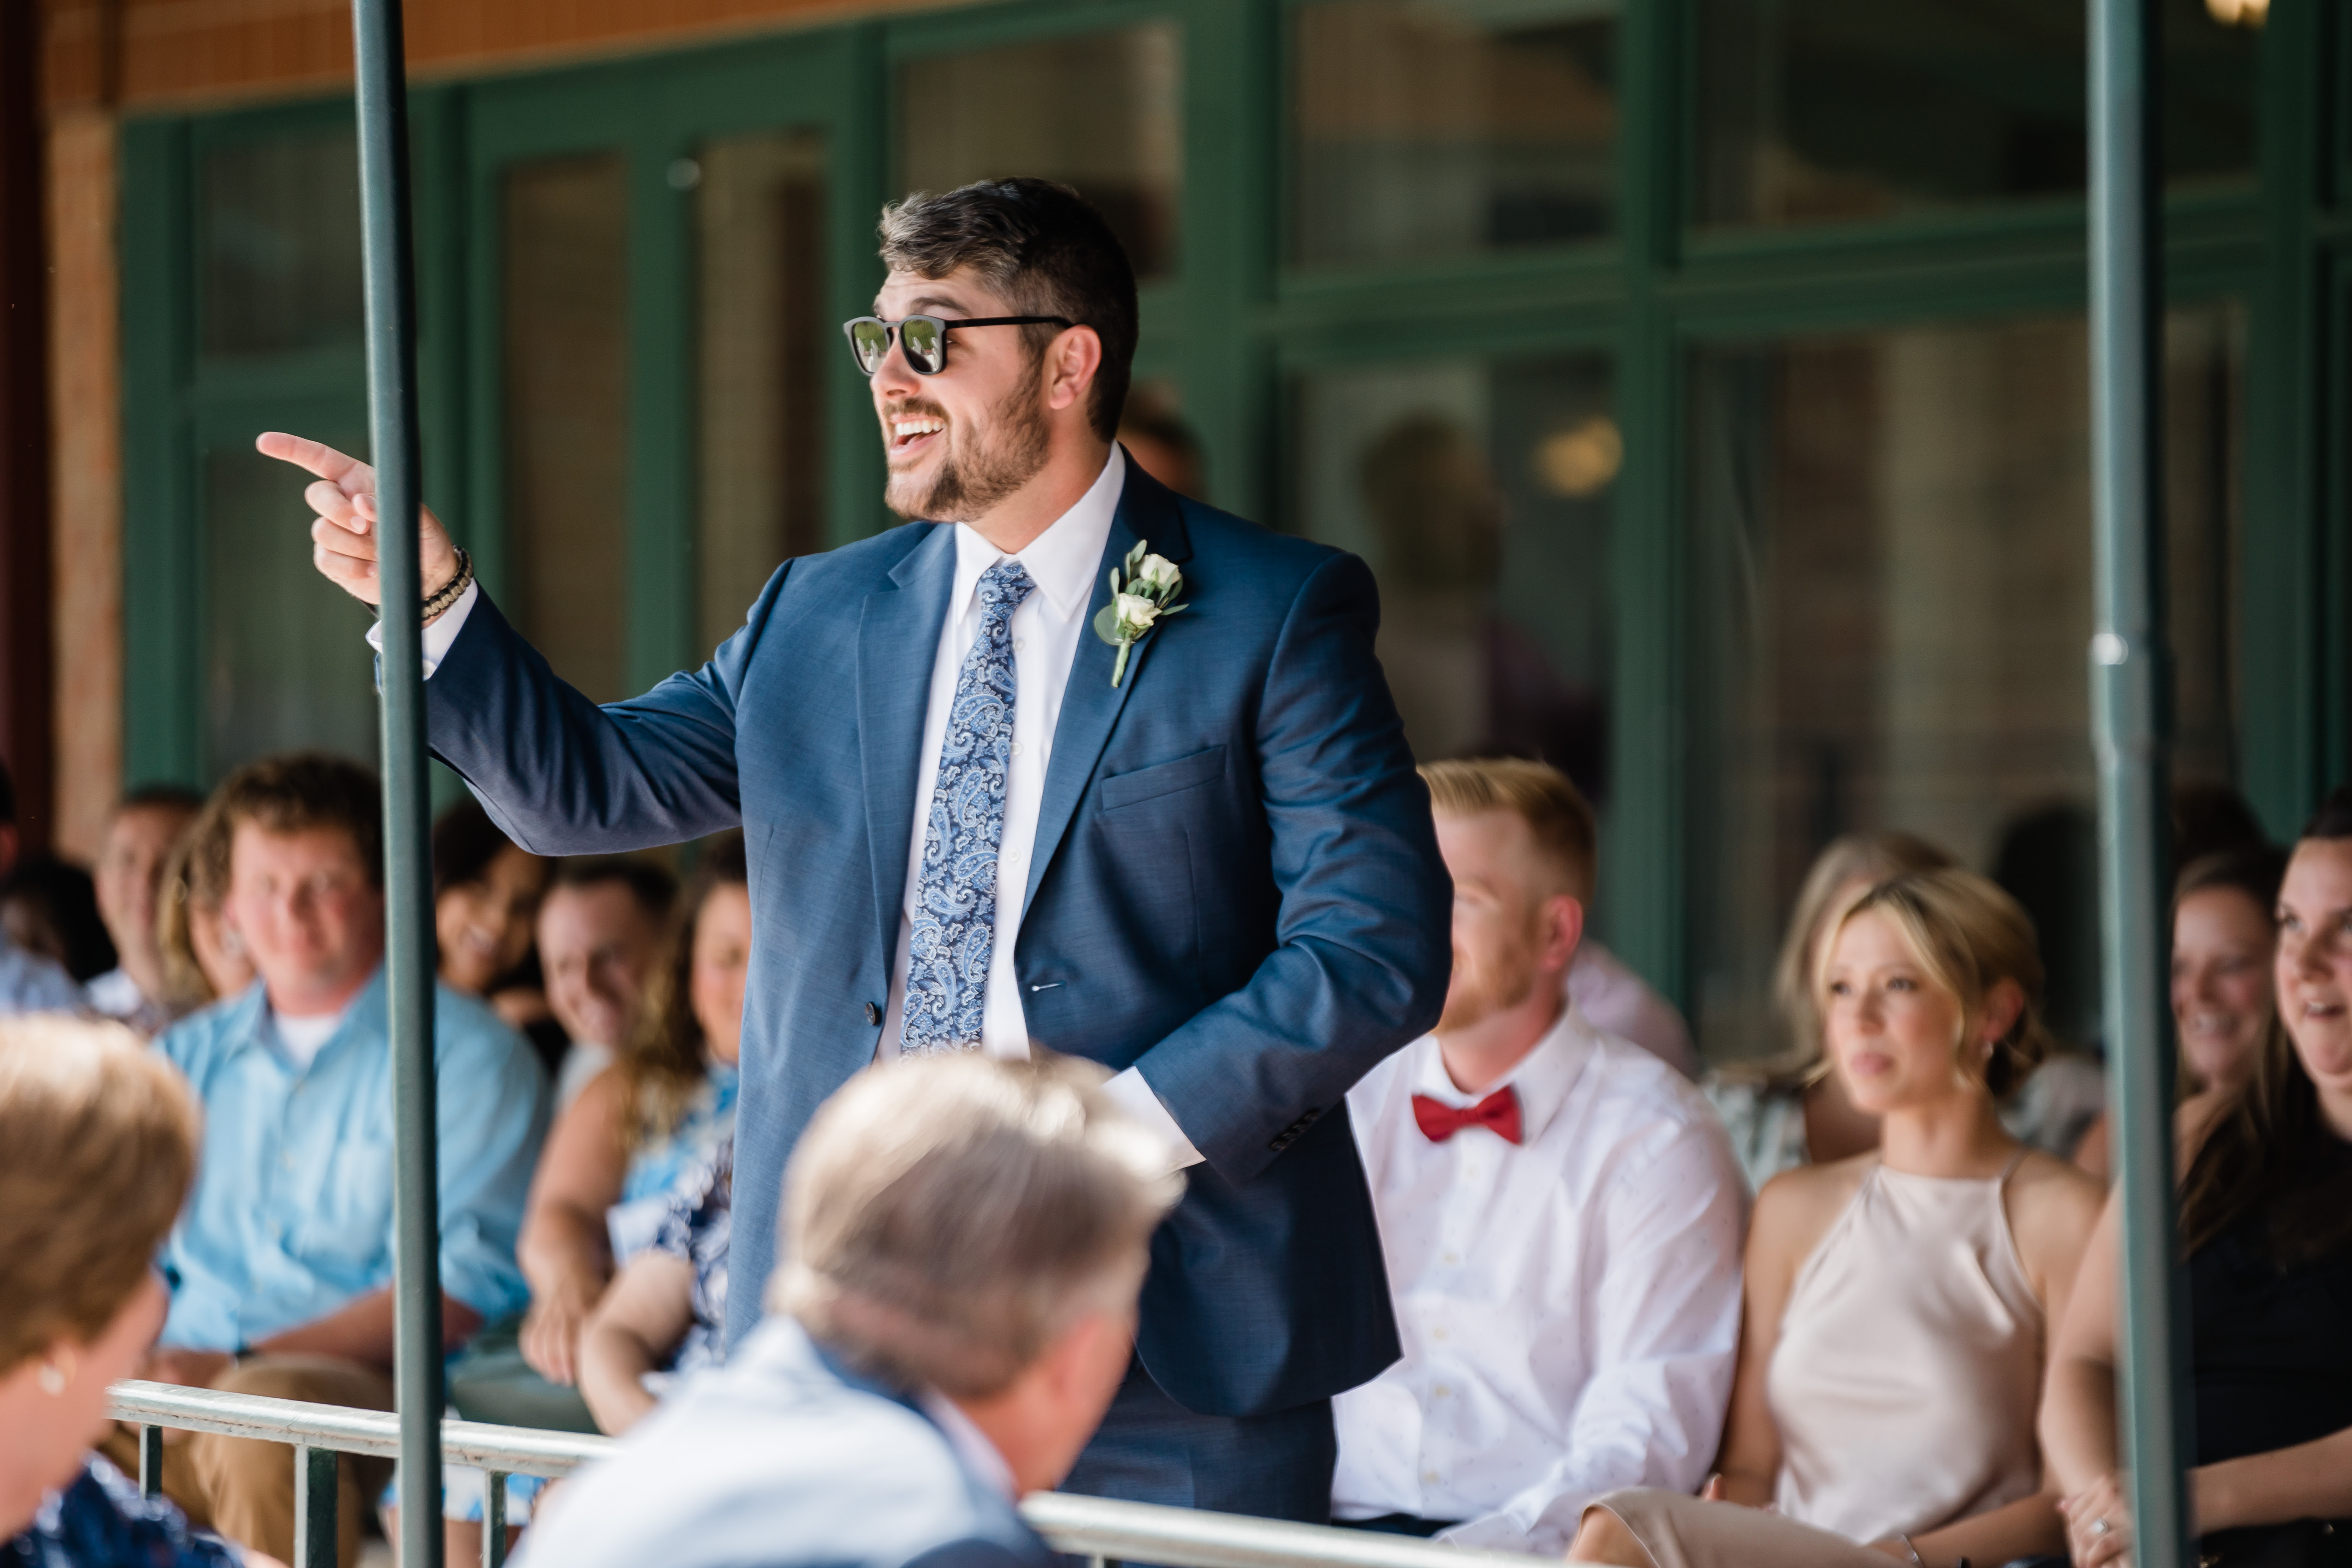 Fort Wayne wedding photographers capture flower guy walking down aisle wearing sunglasses throwing petals